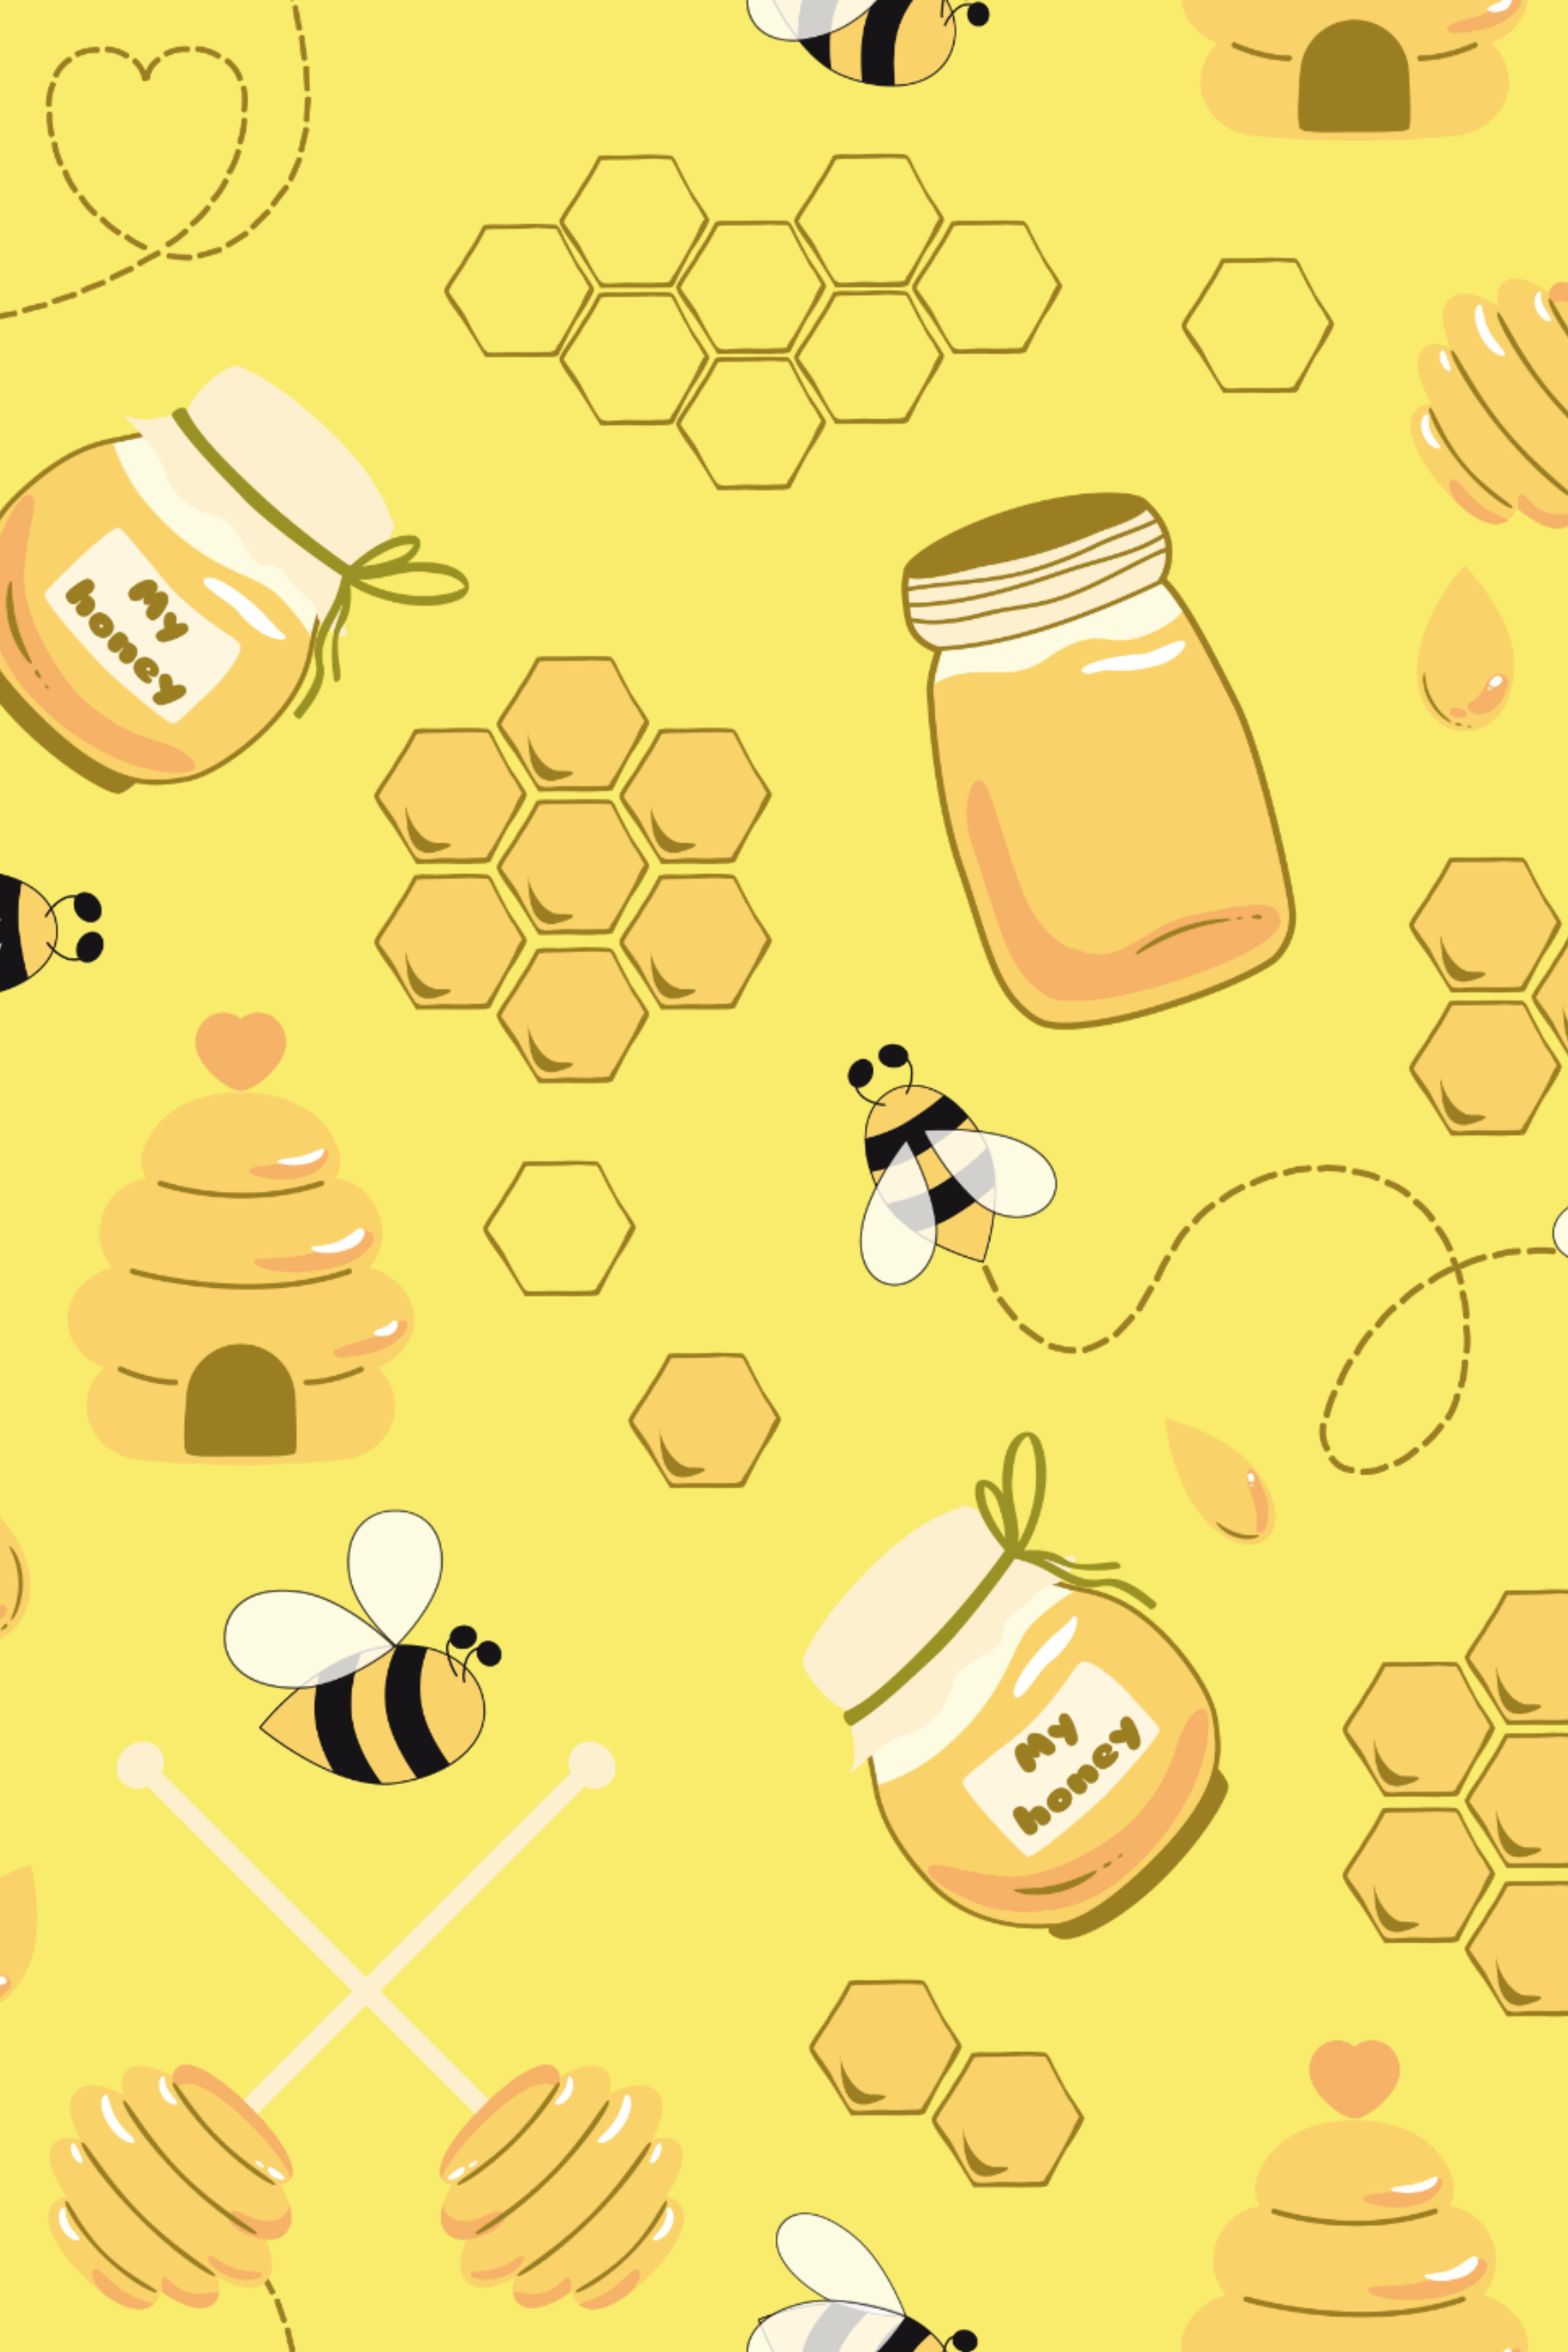 Bees & honey ideas